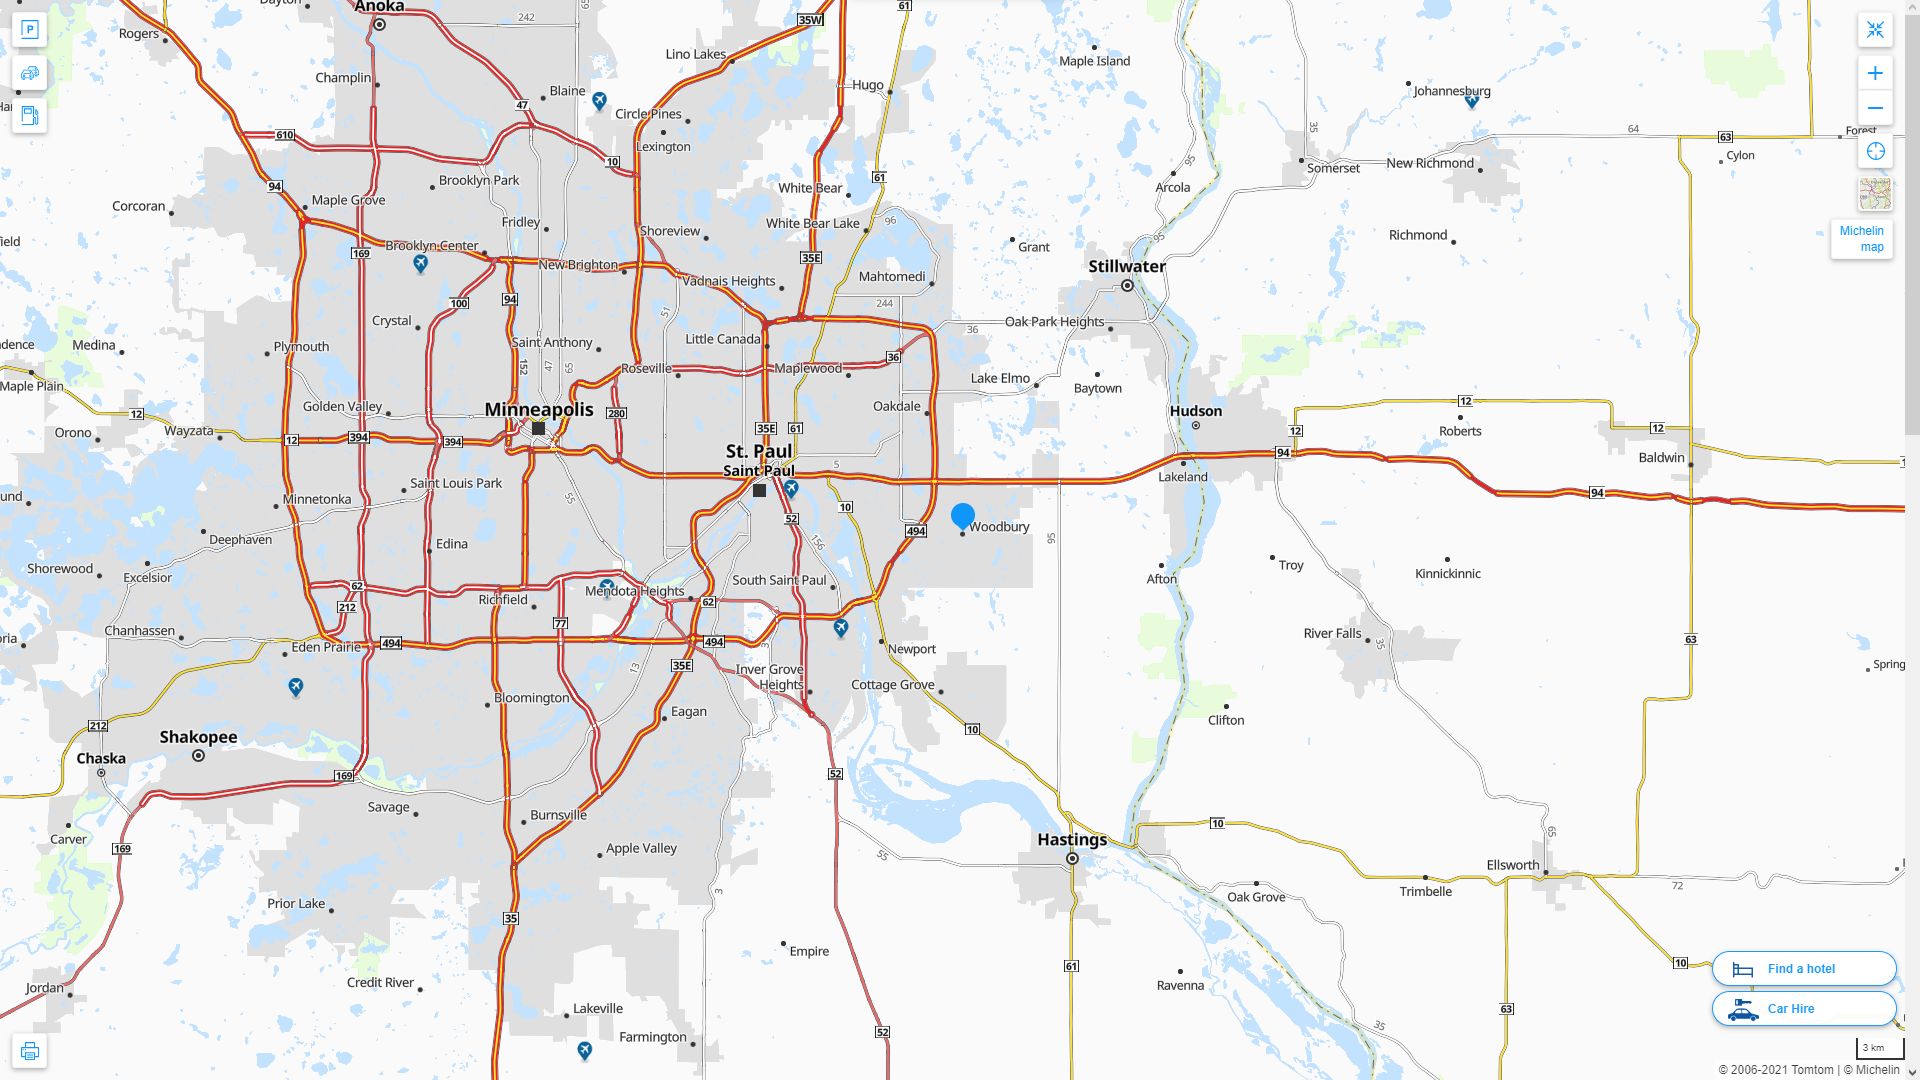 Woodbury Minnesota Highway and Road Map